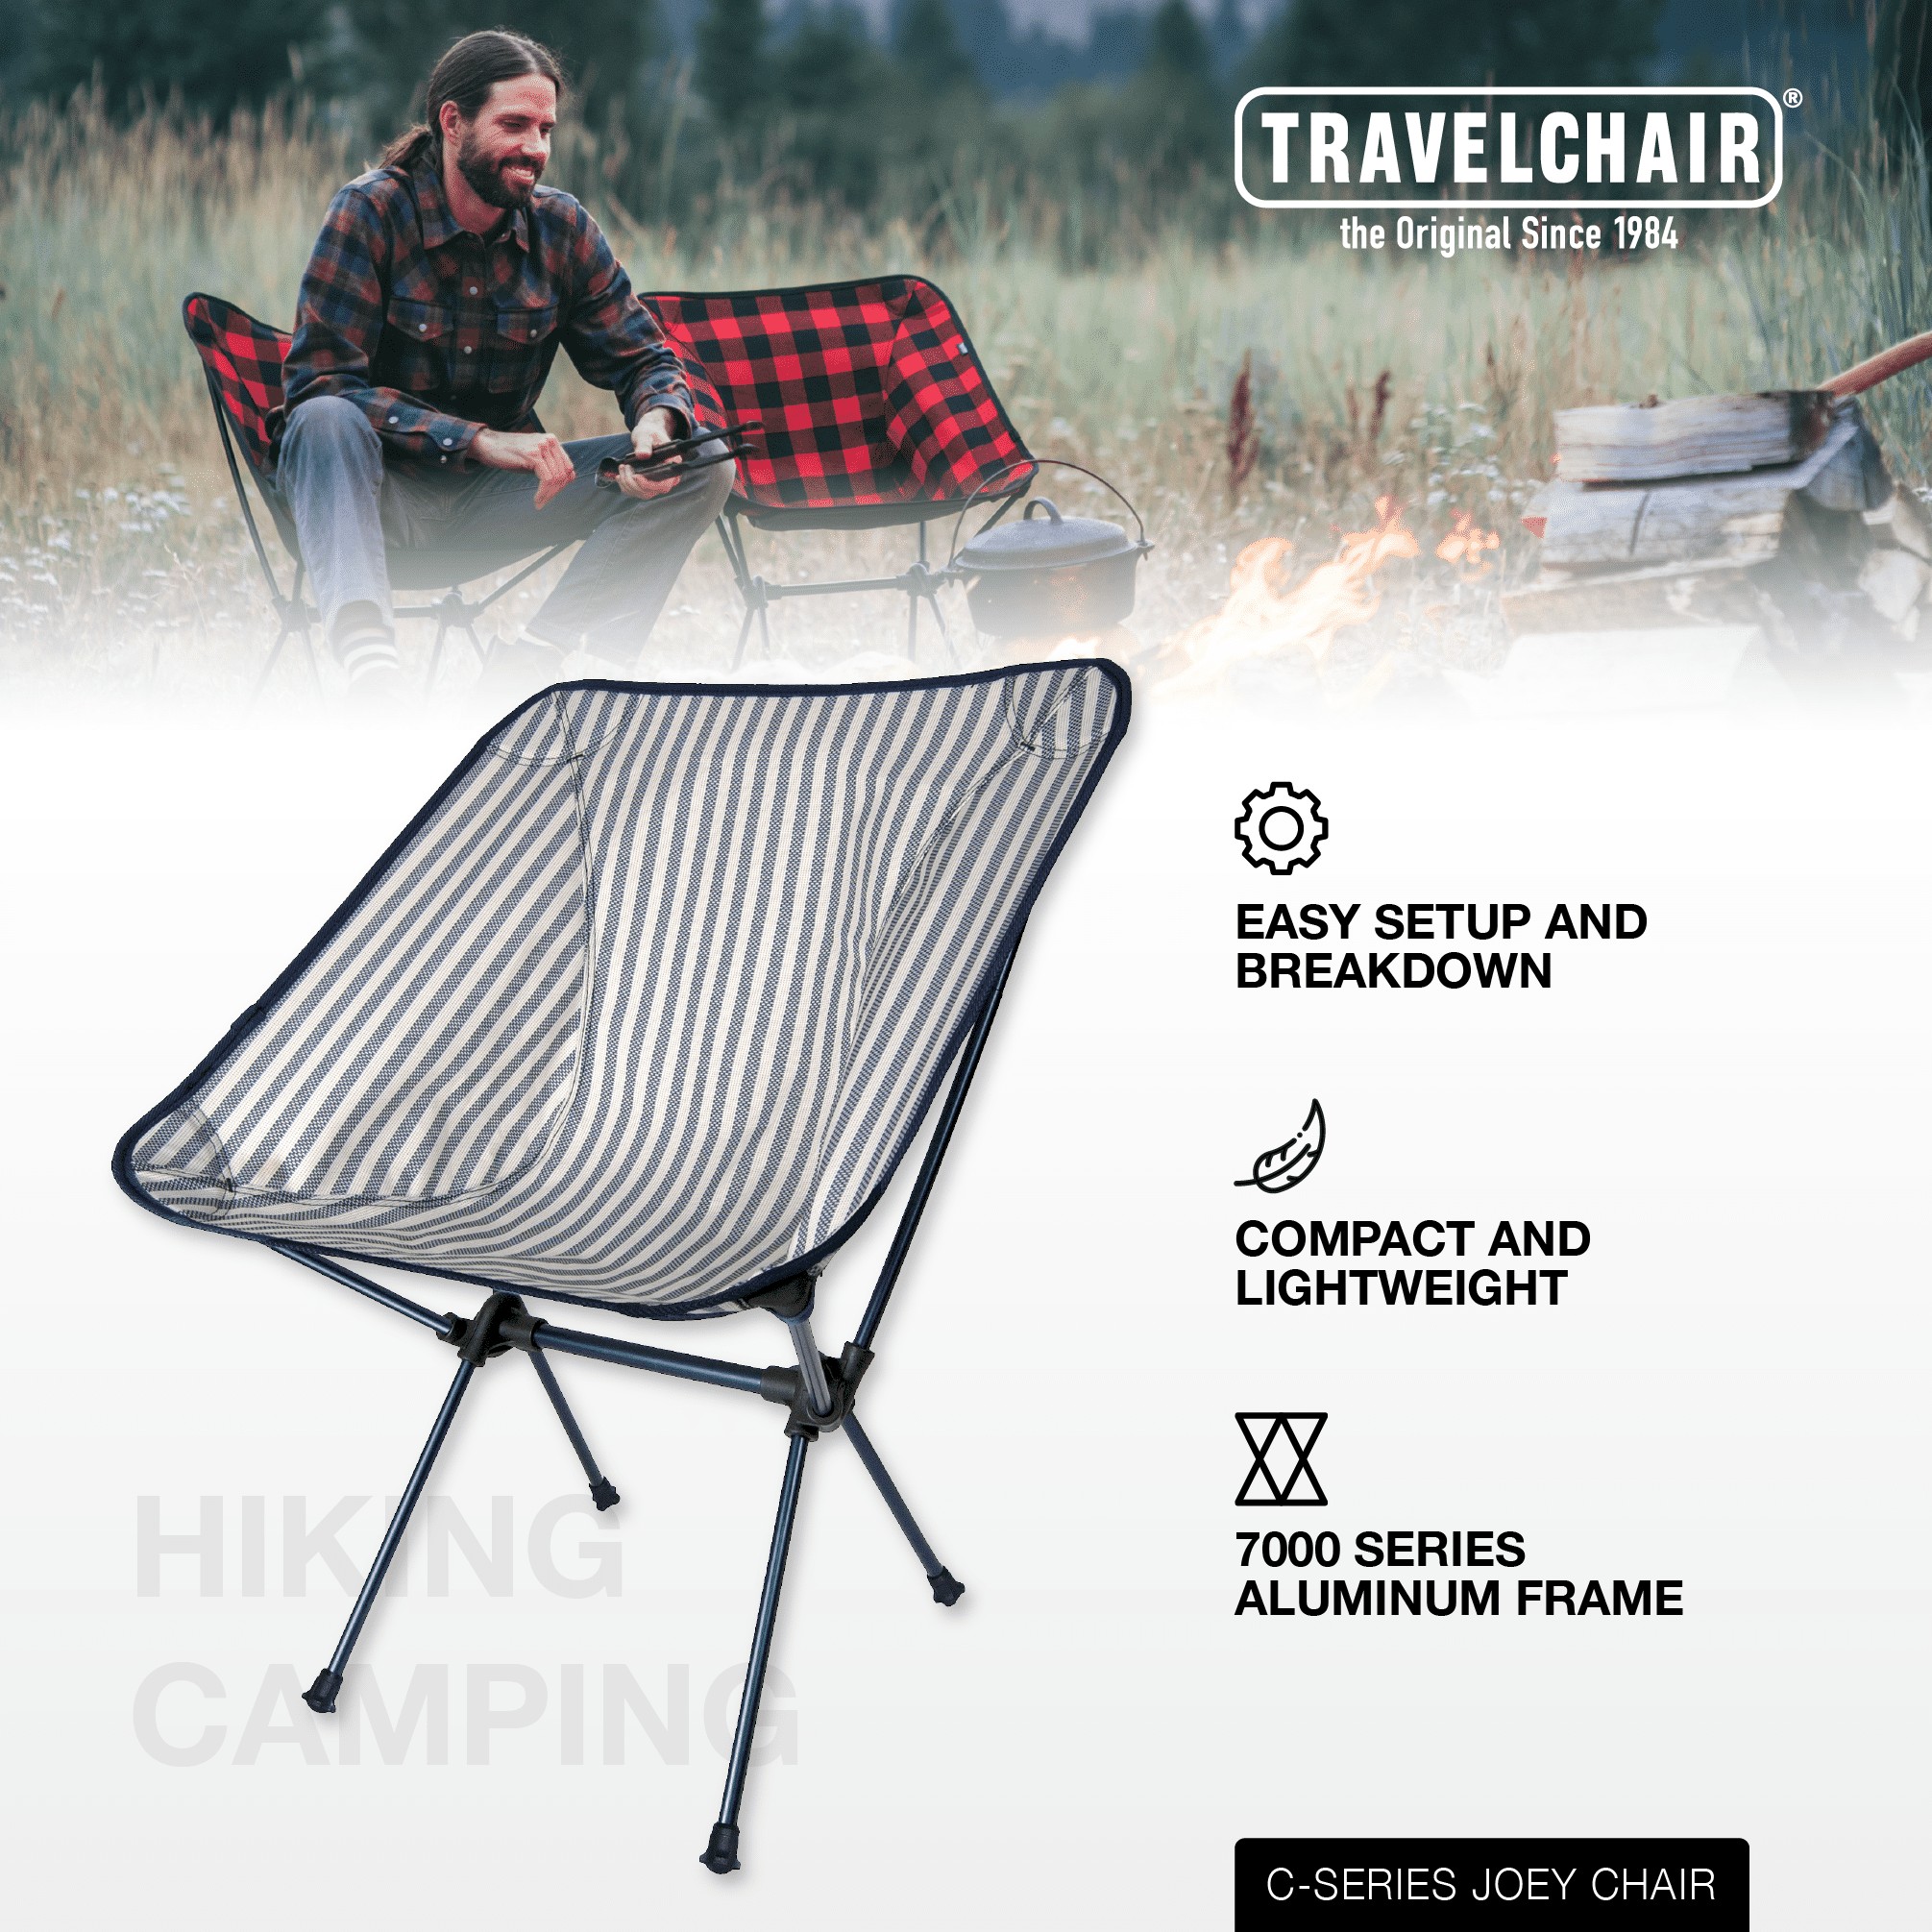 C-Series Joey - Travel Chair